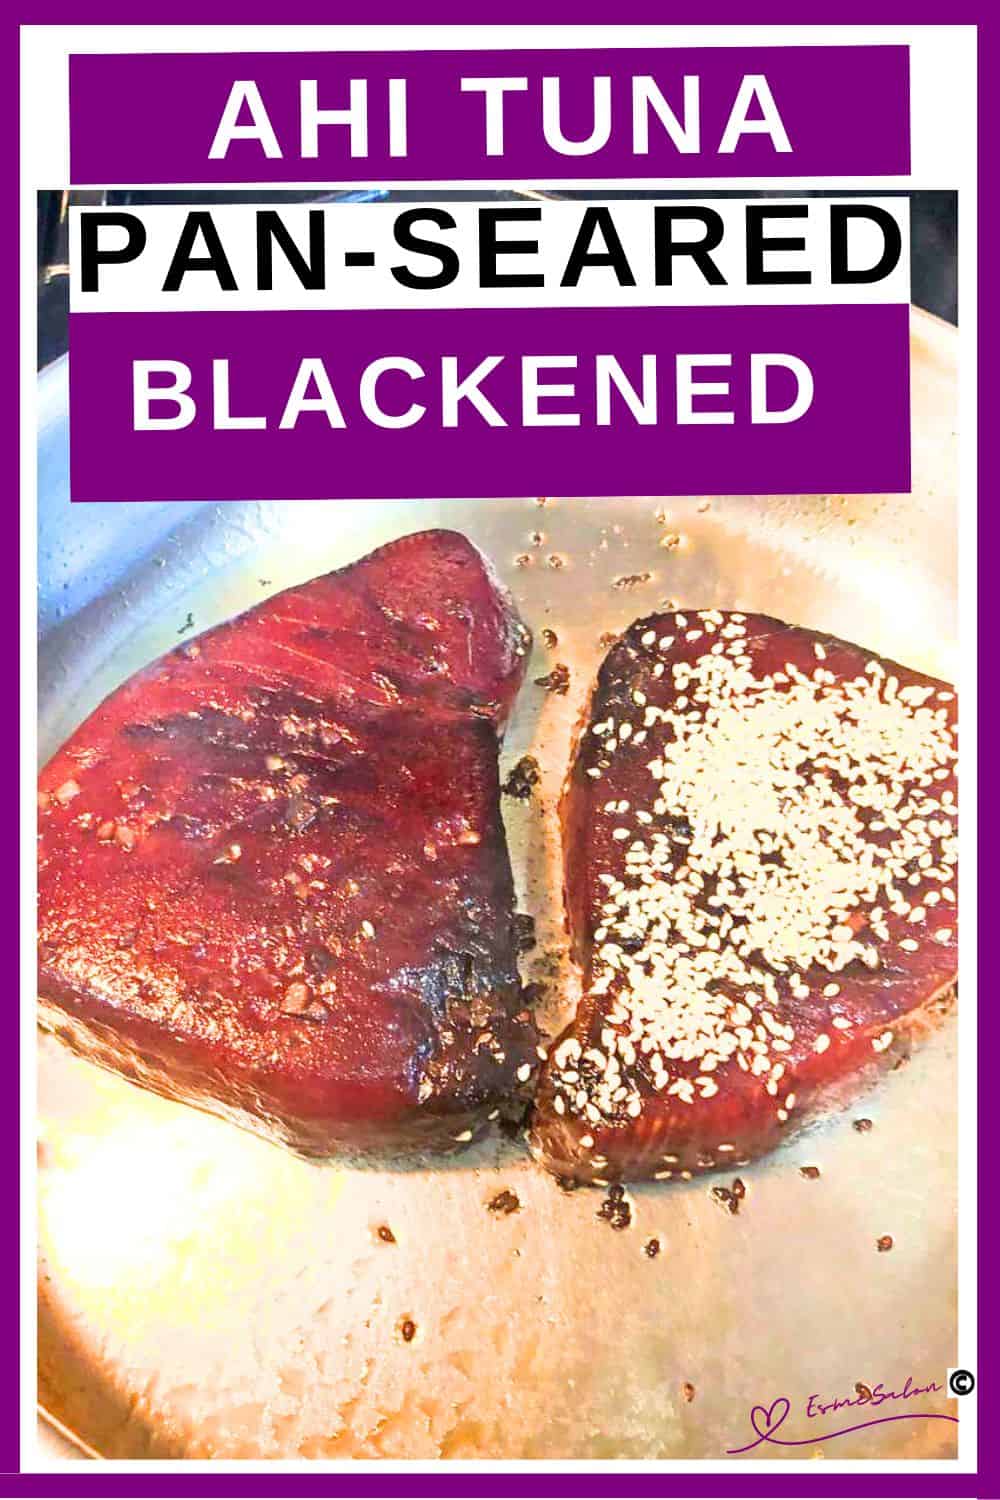 an image of two pieced of raw Blackened Ahi Tuna